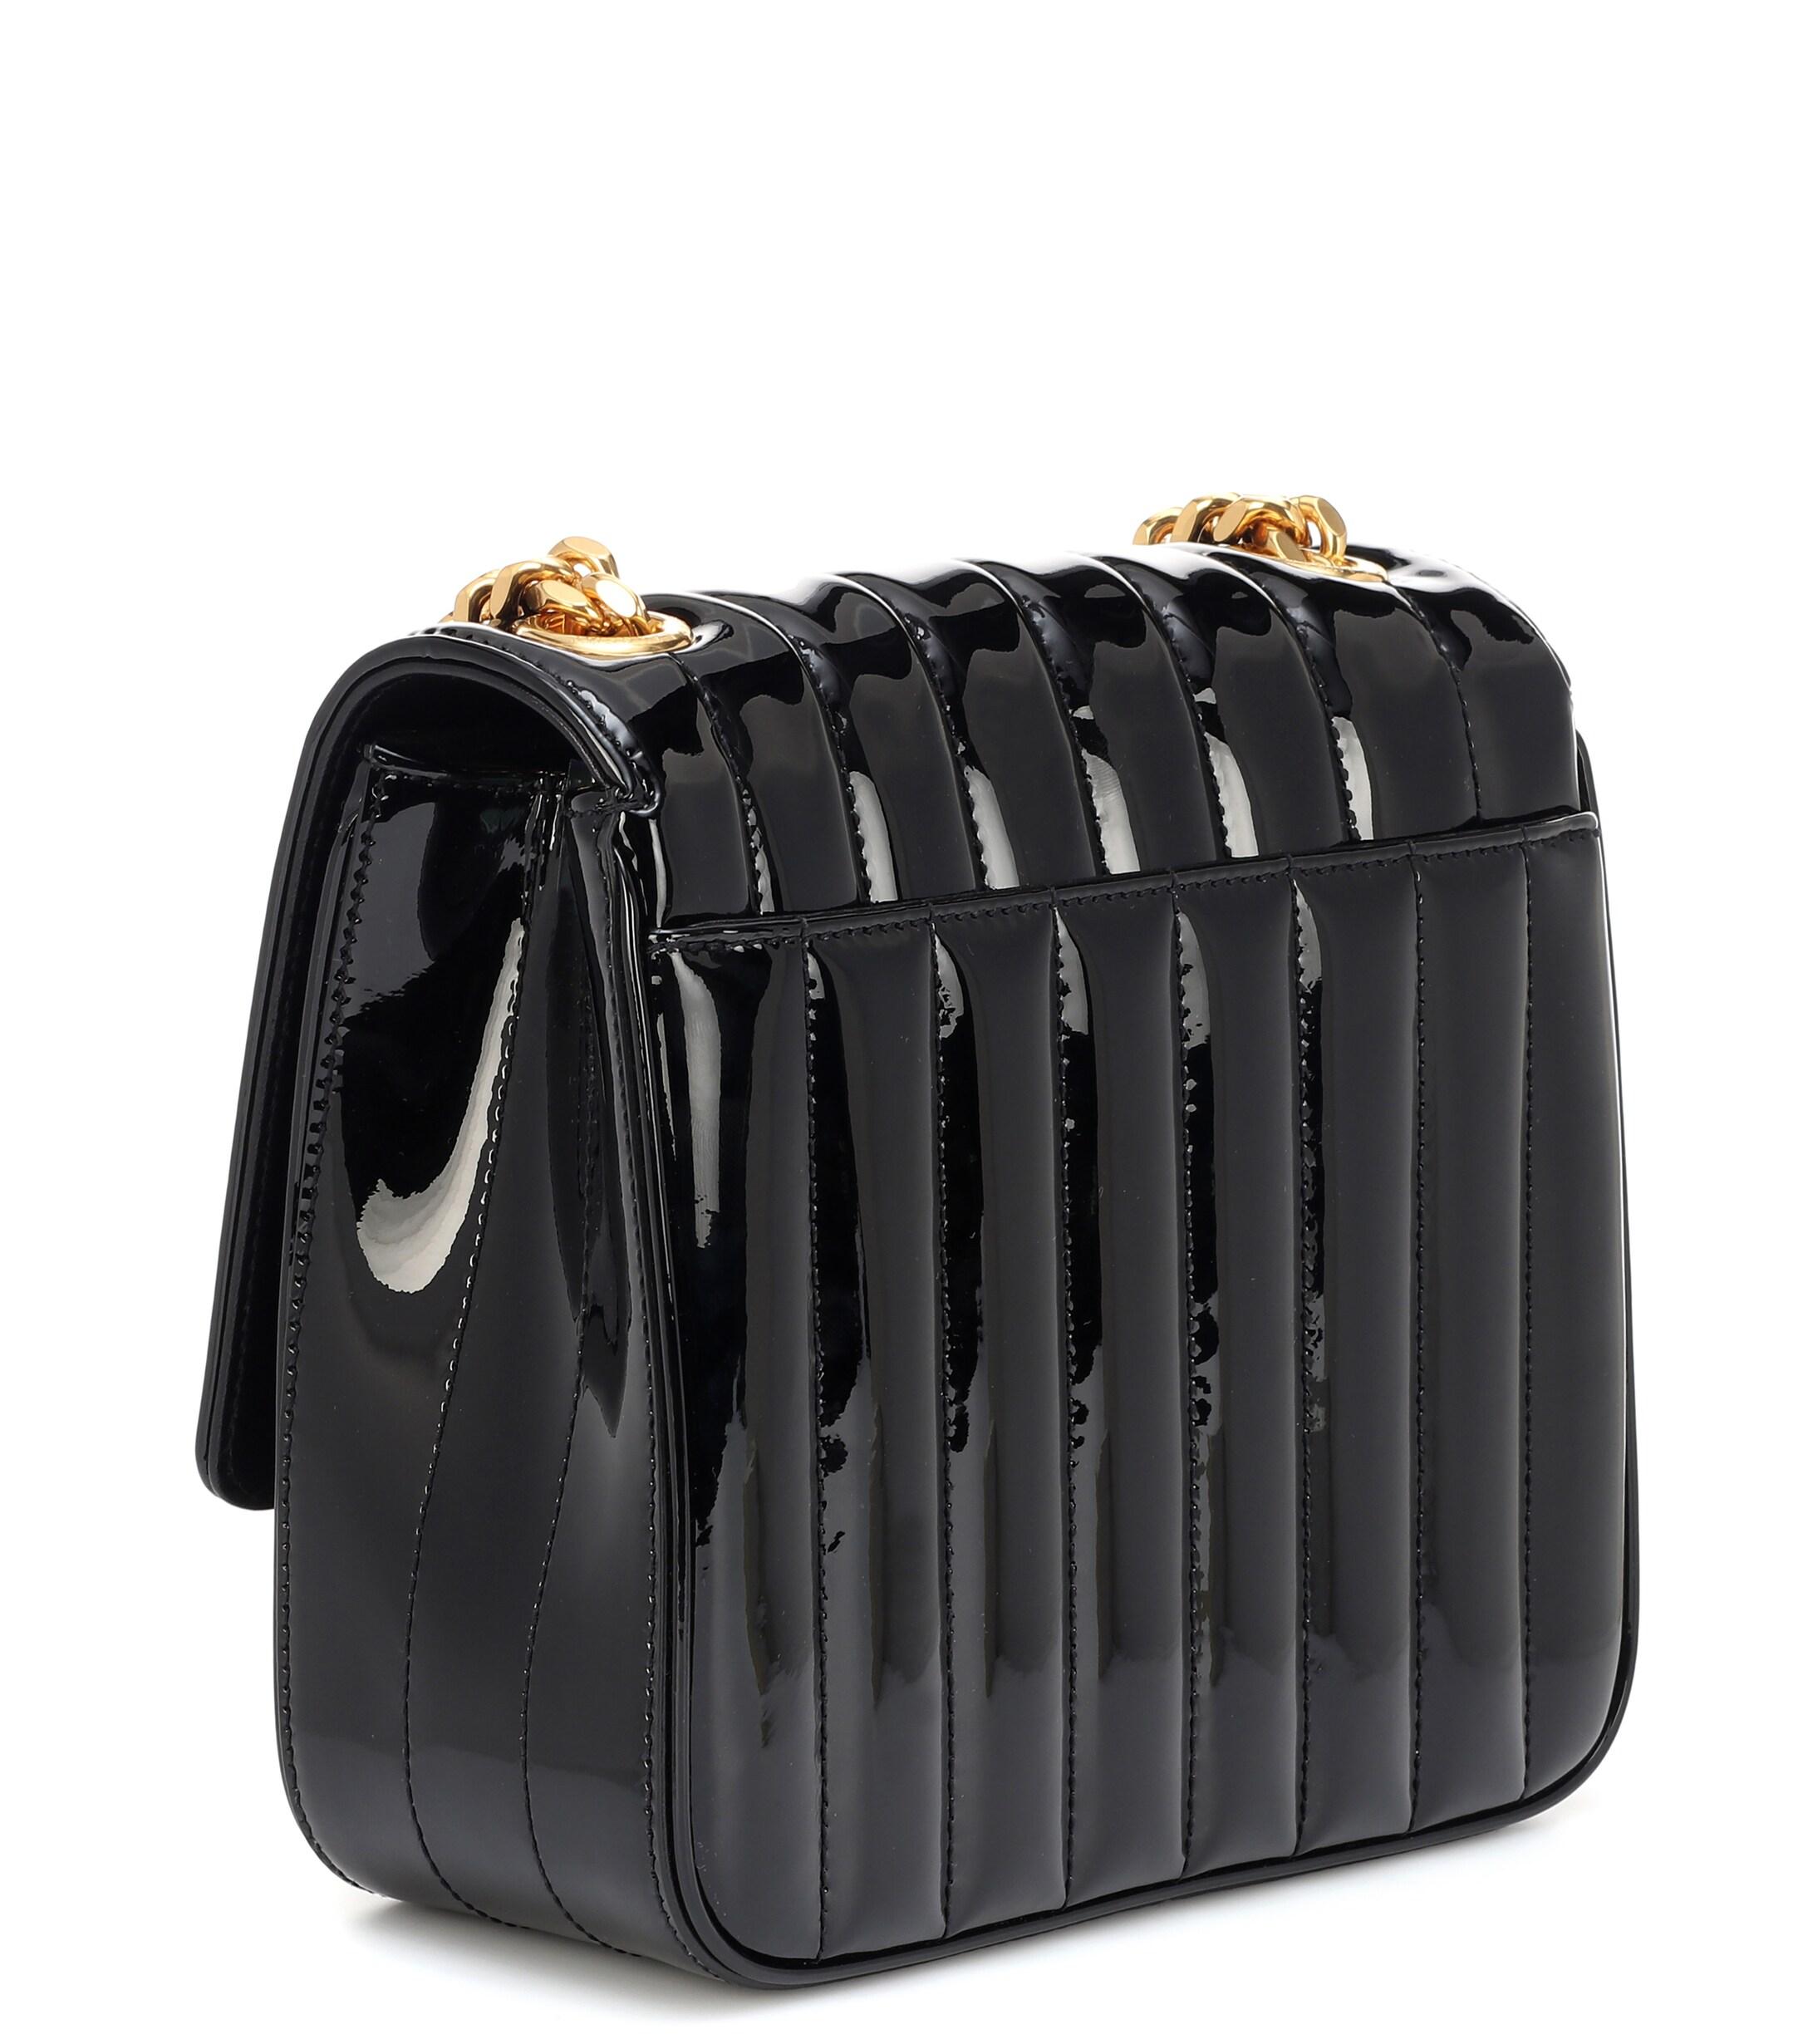 Saint Laurent Vicky Medium Leather Crossbody Bag in Black - Lyst